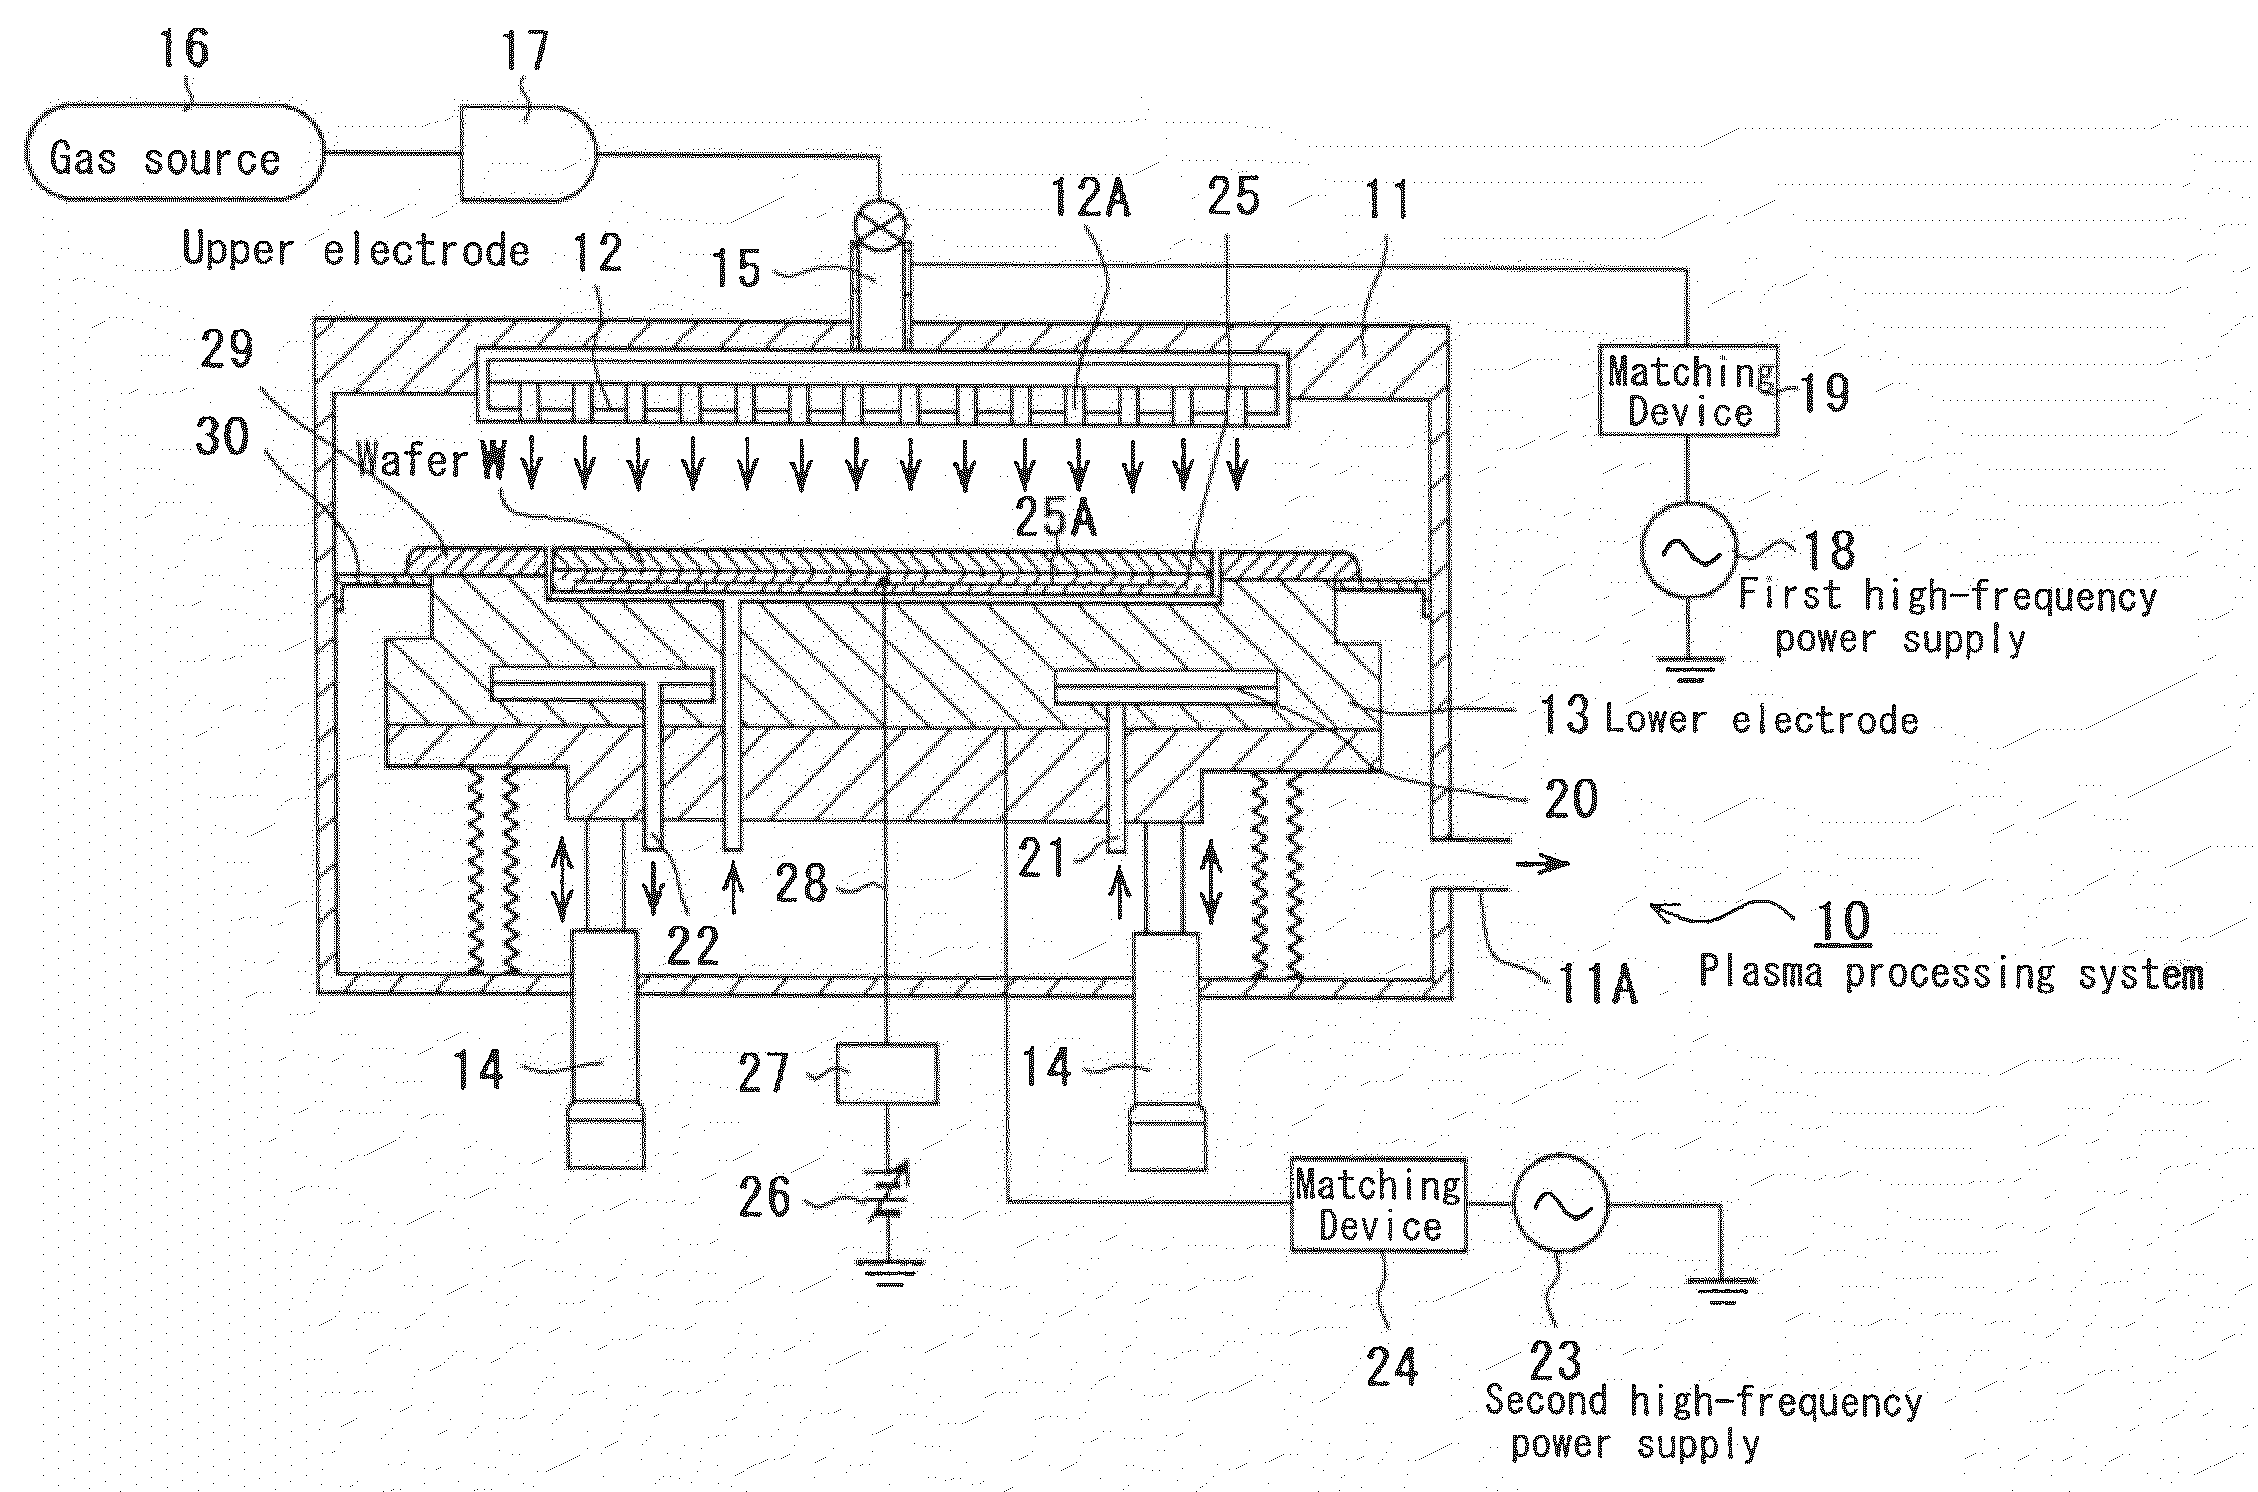 Apparatus and method for plasma processing